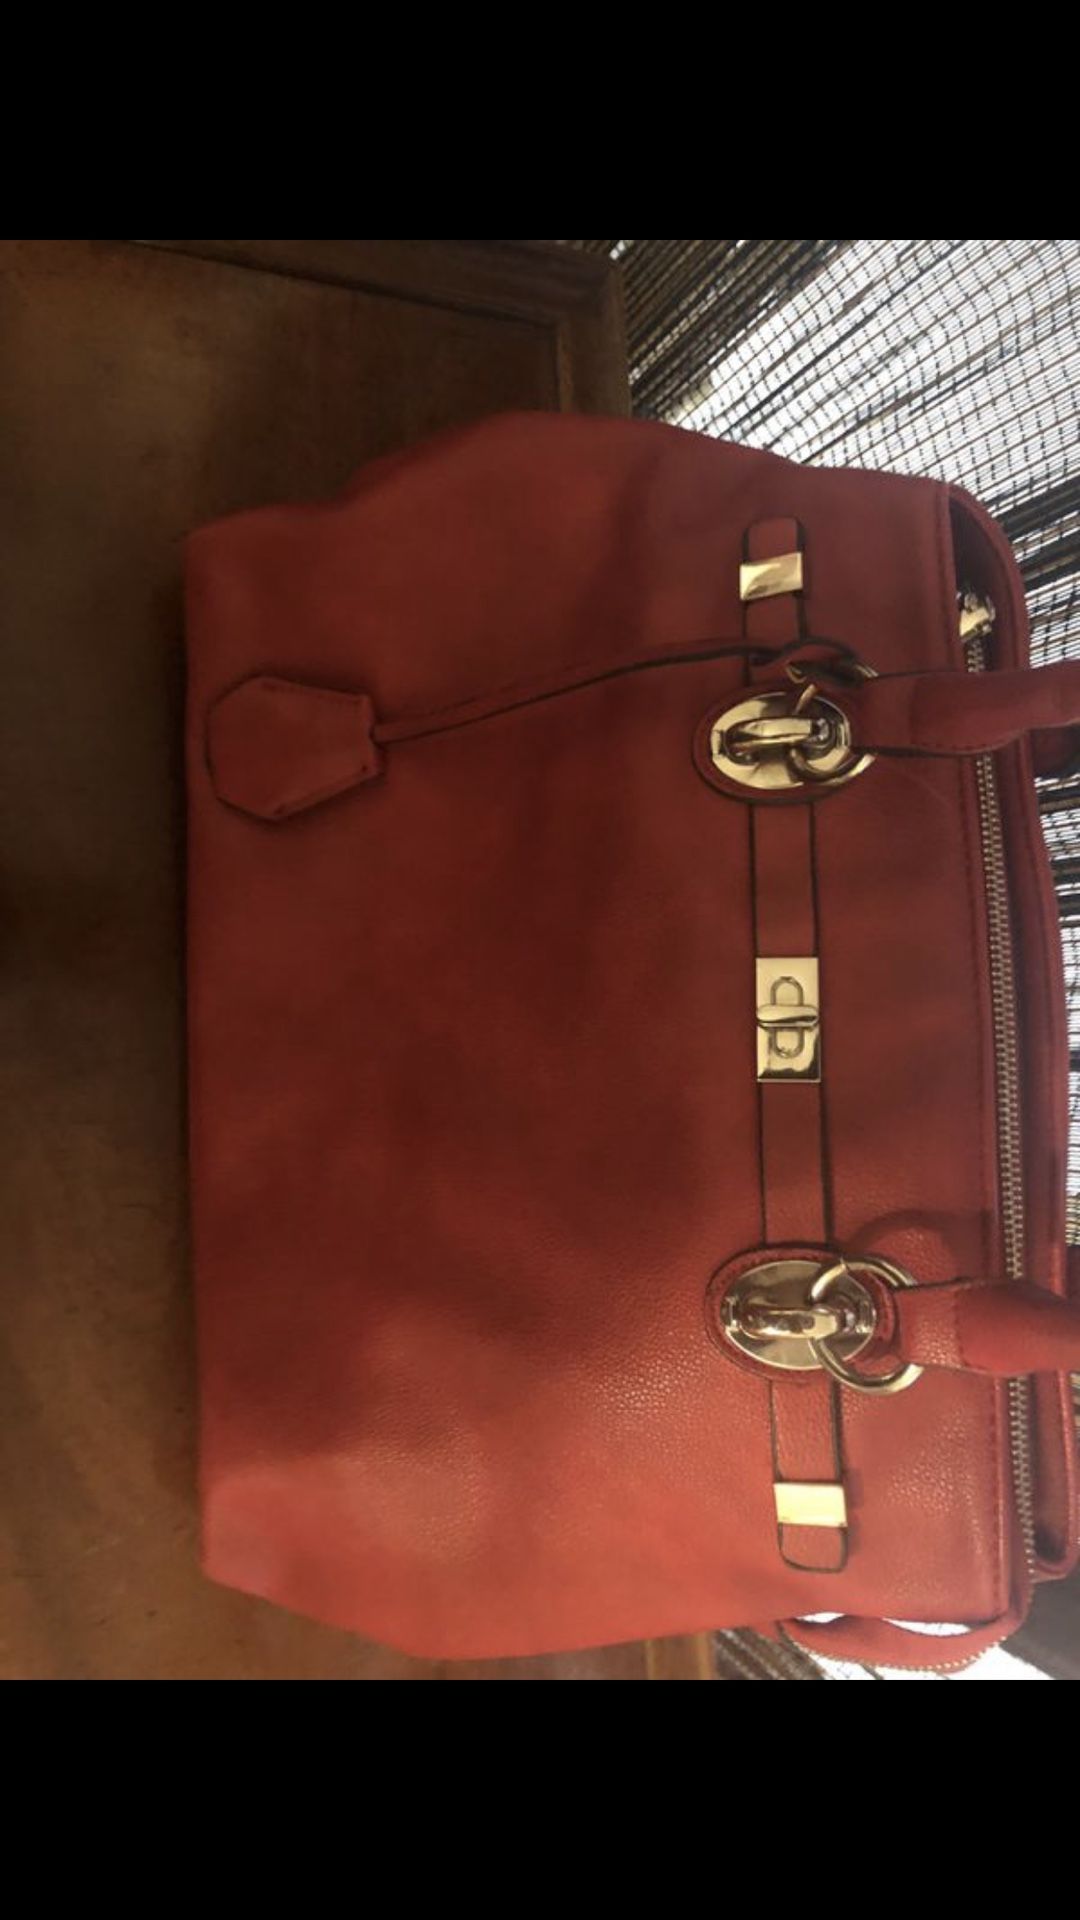 Oversized red handbag